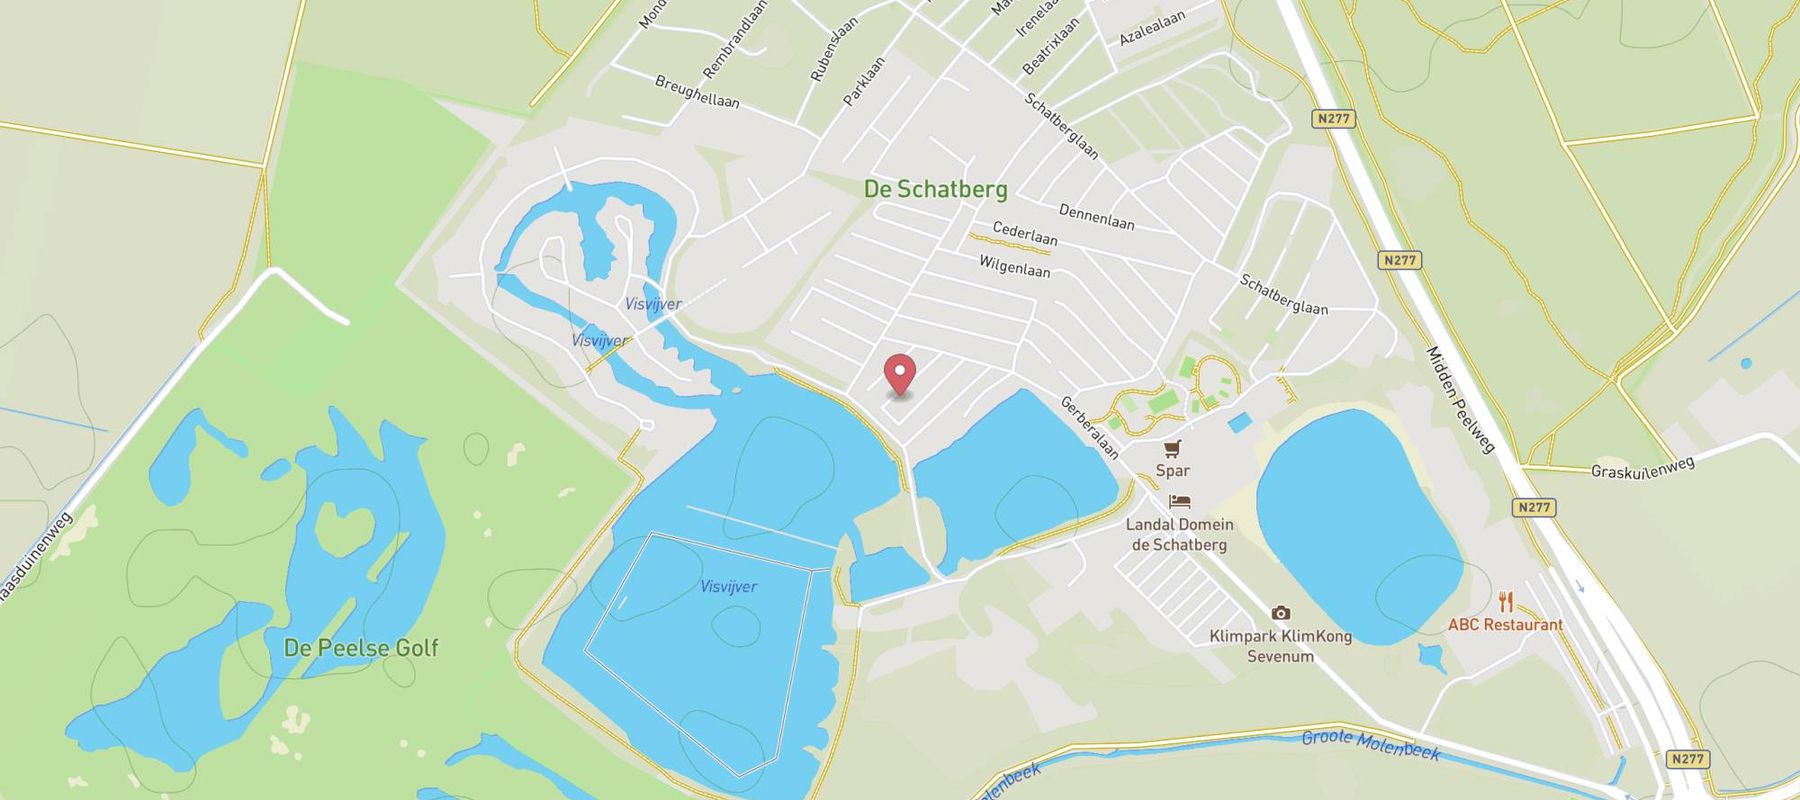 Landal Domein De Schatberg map